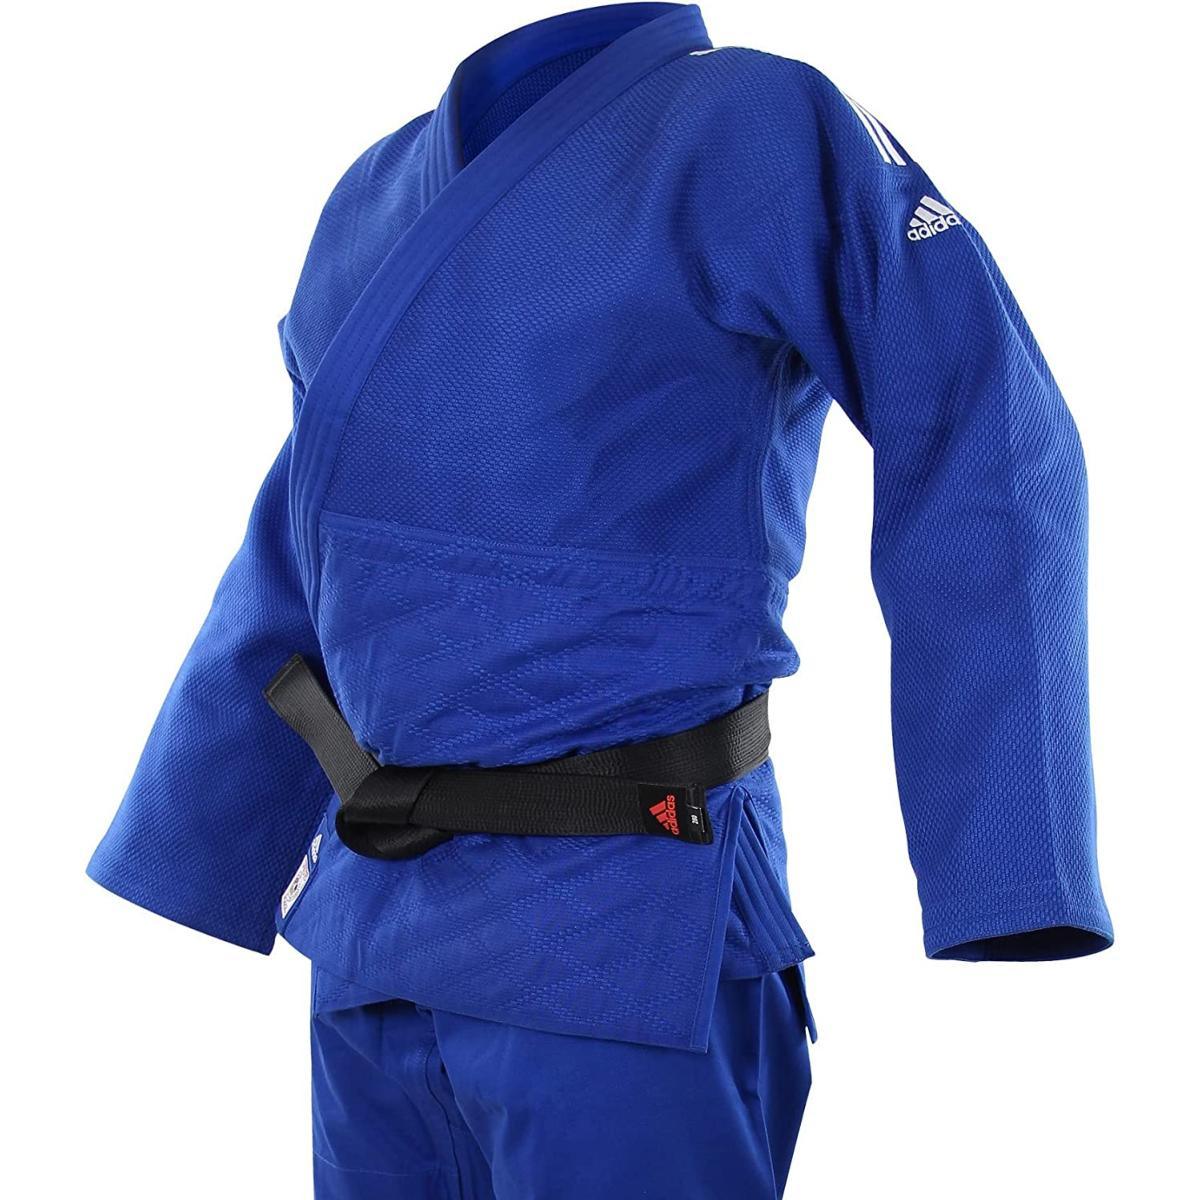 Kimono de Judo Adidas Champion III IJF Slim - Bleu - Boutique des Arts Martiaux et Sports de Combat